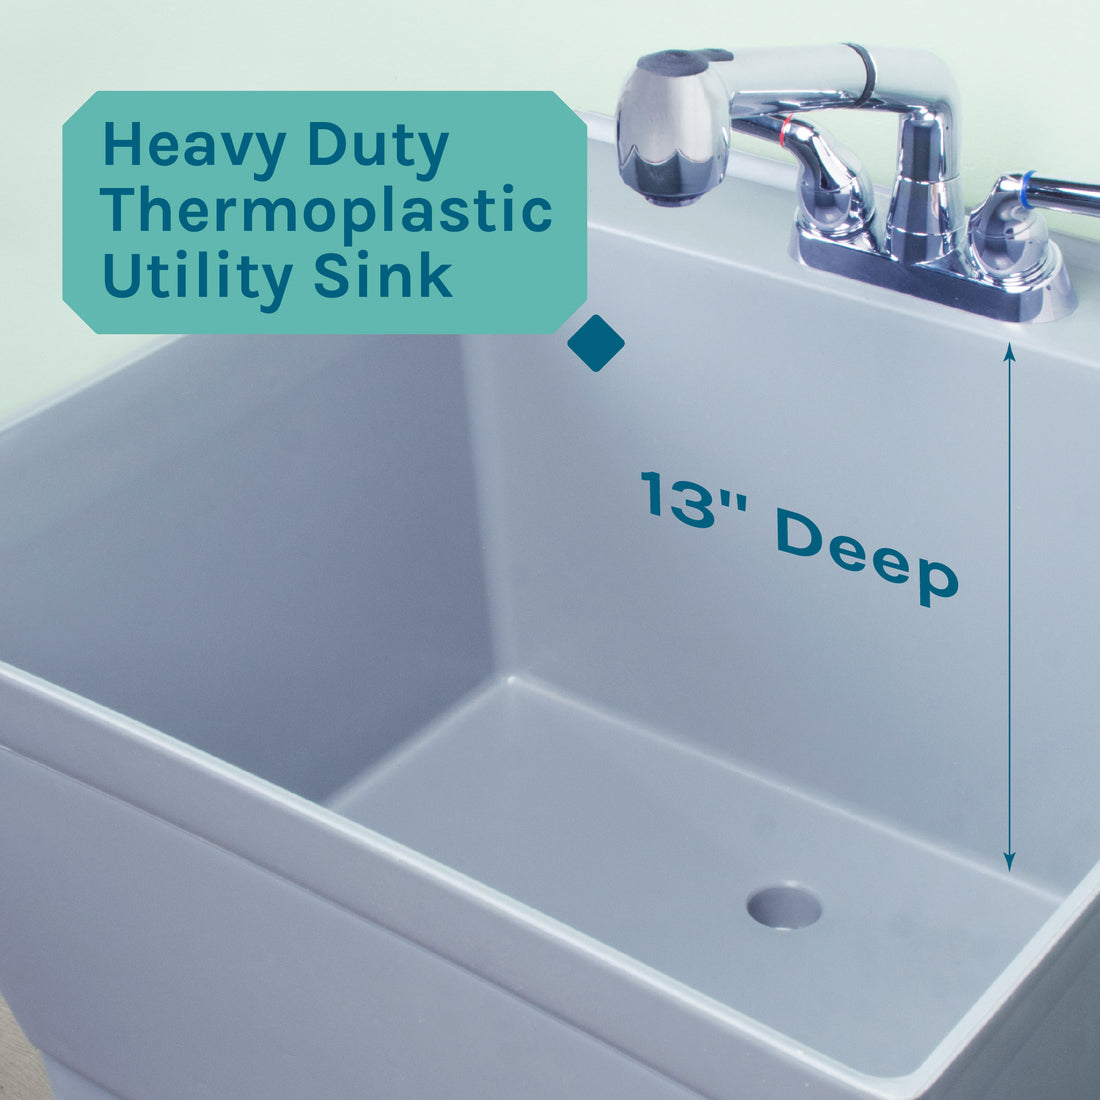 Tehila Standard Freestanding Grey Utility Sink with Chrome Finish Pull-Out Faucet - Utility sinks vanites Tehila